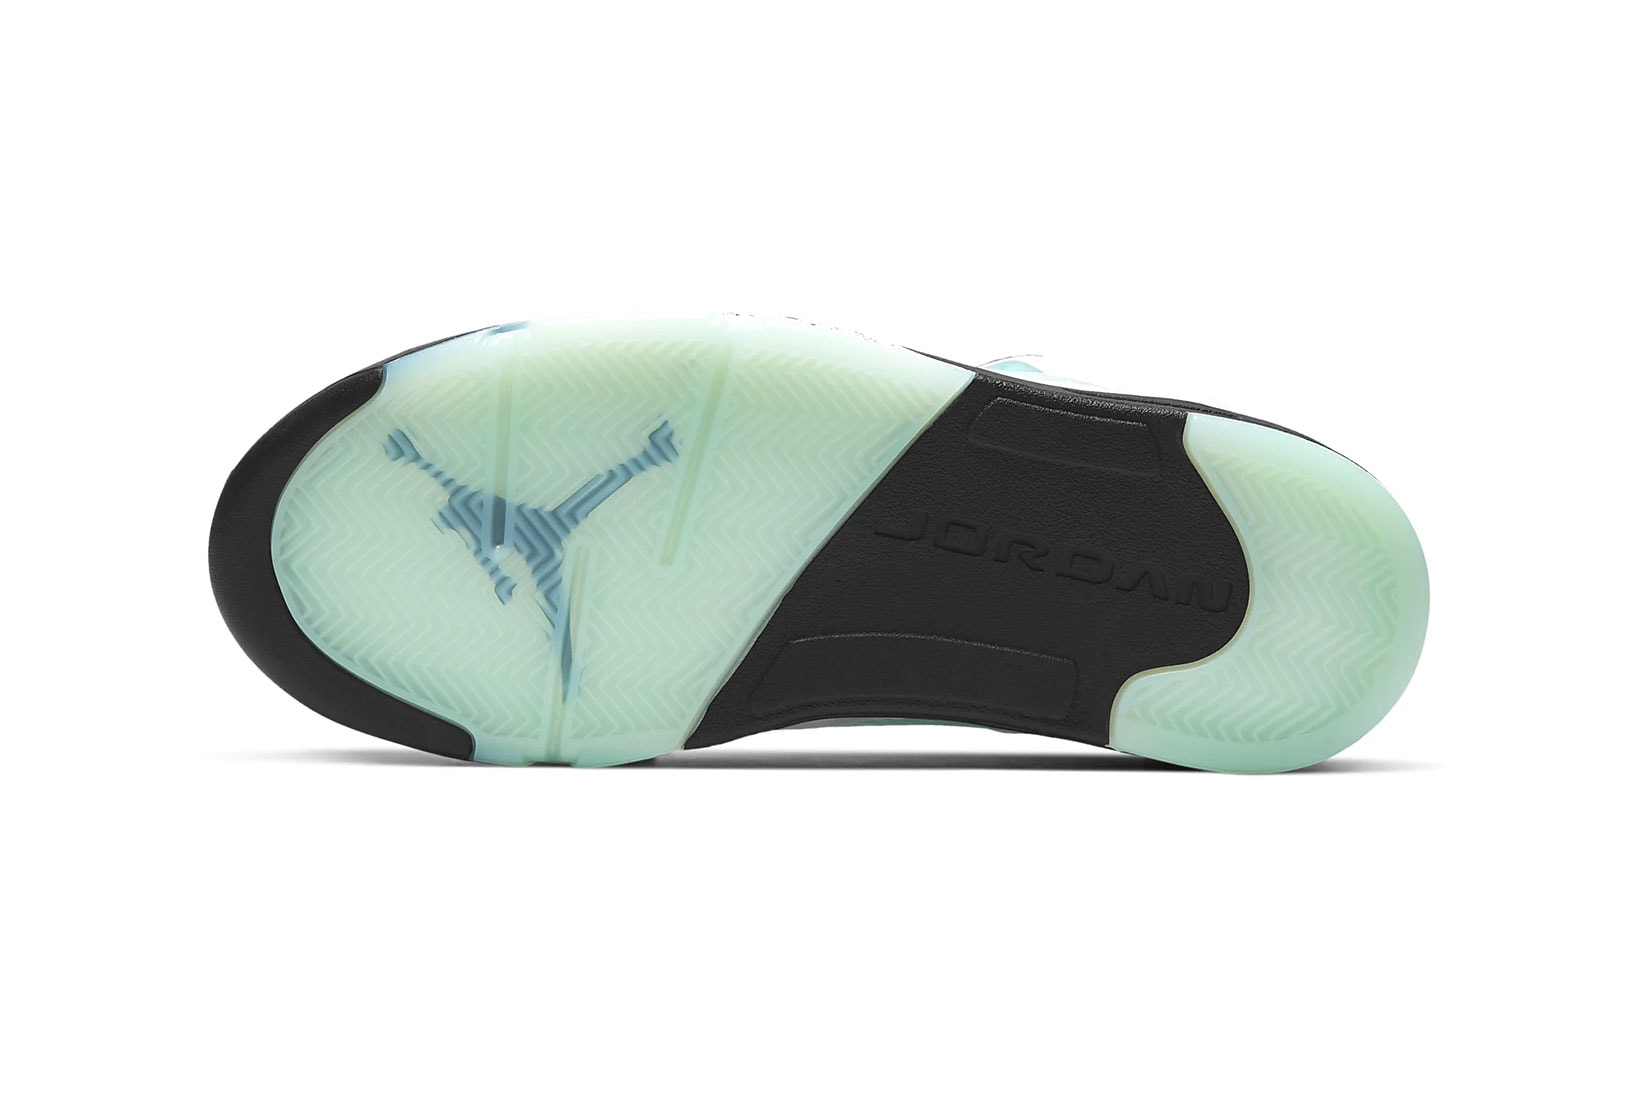 nike air jordan 5 retro sneakers blue island green white black shoes sneakerhead footwear